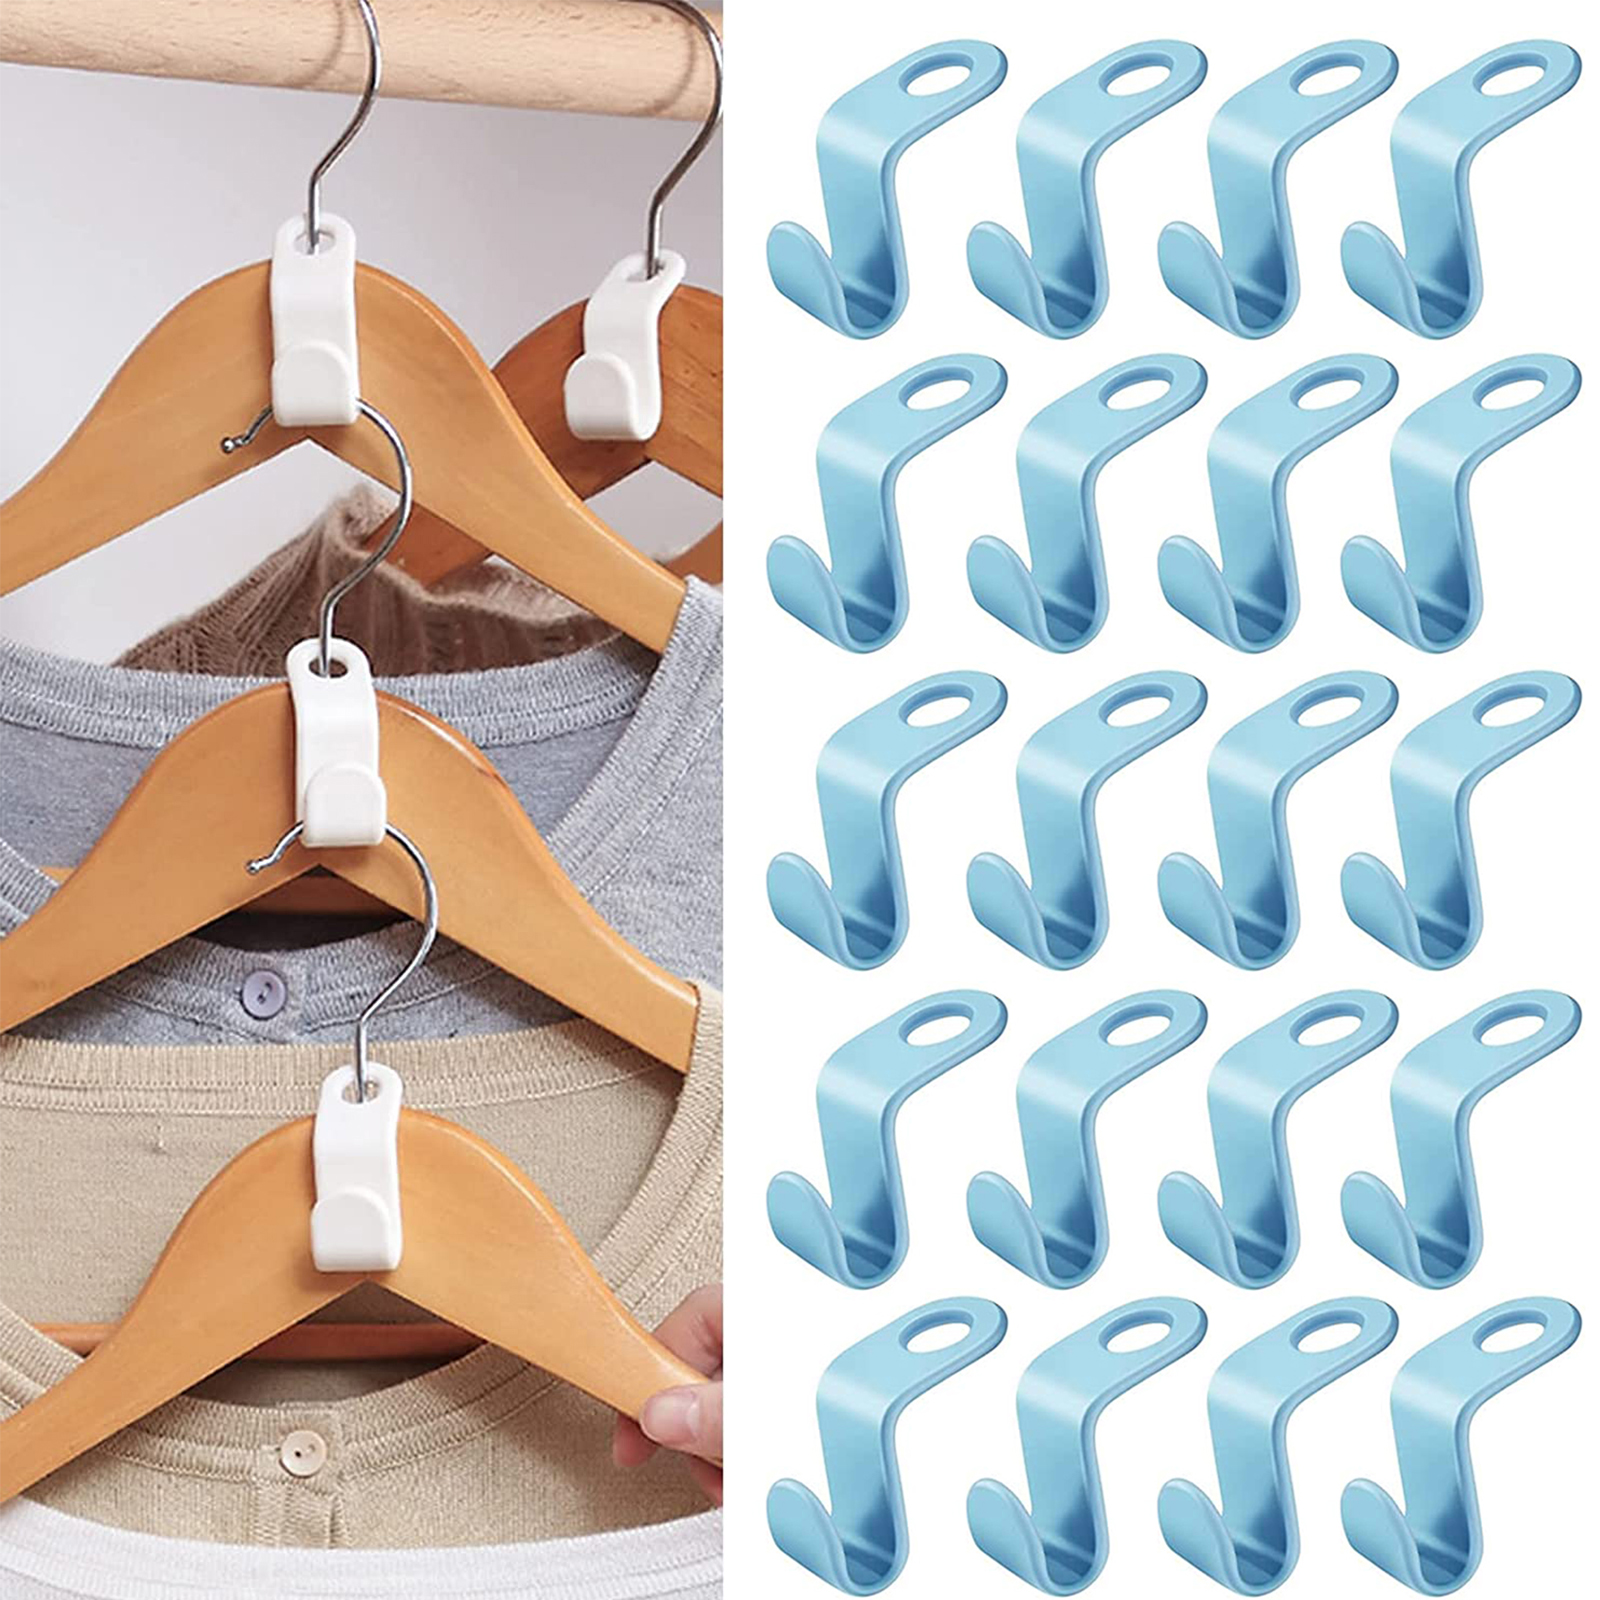 Clothes Hanger Connector Hooks Space Saving Hanger Extender - Temu